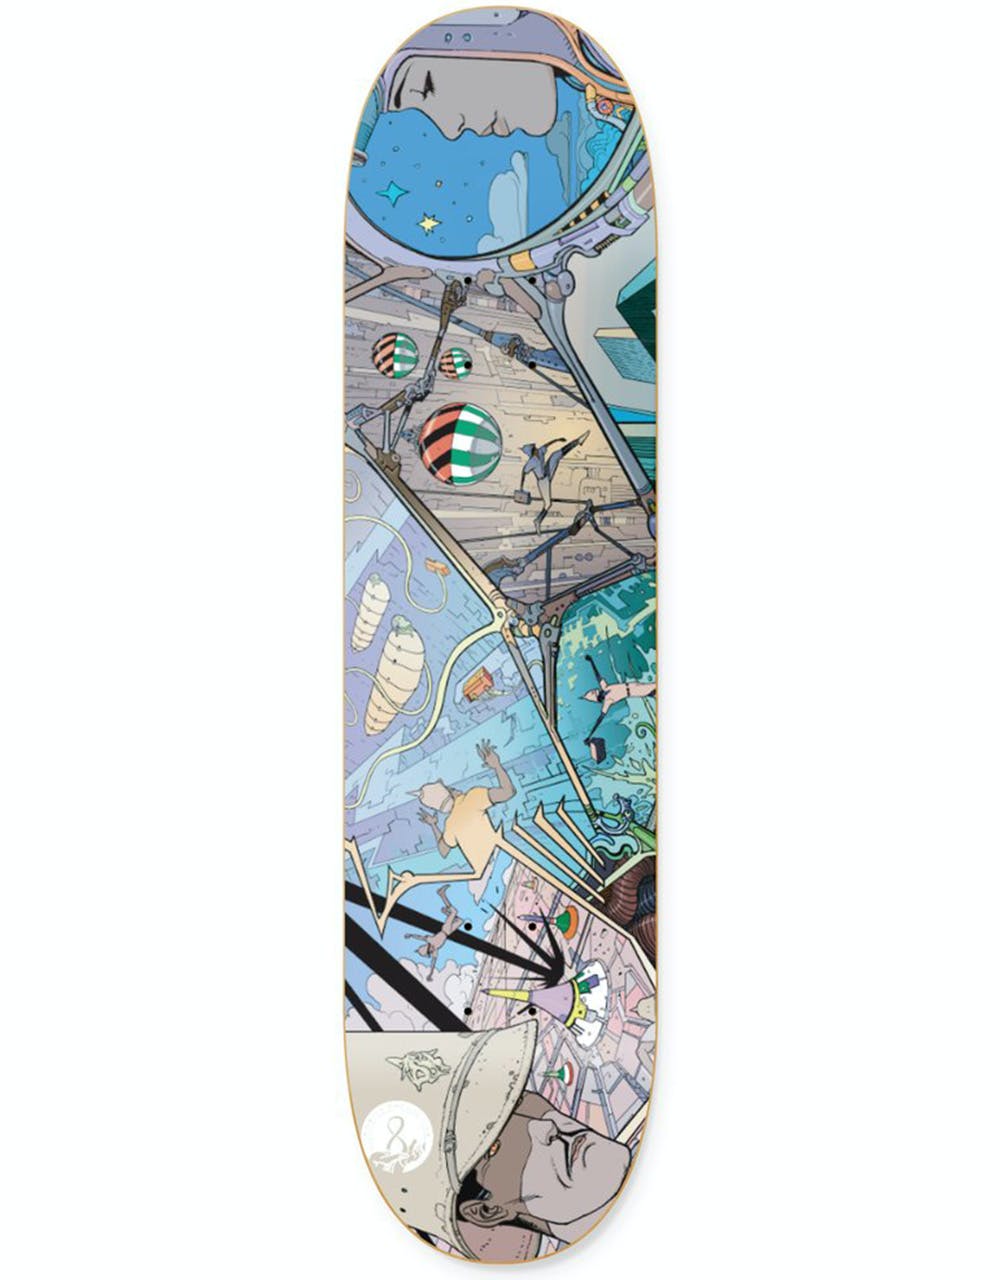 Primitive x Moebius Gillet Major Fresque Skateboard Deck - 8.1"